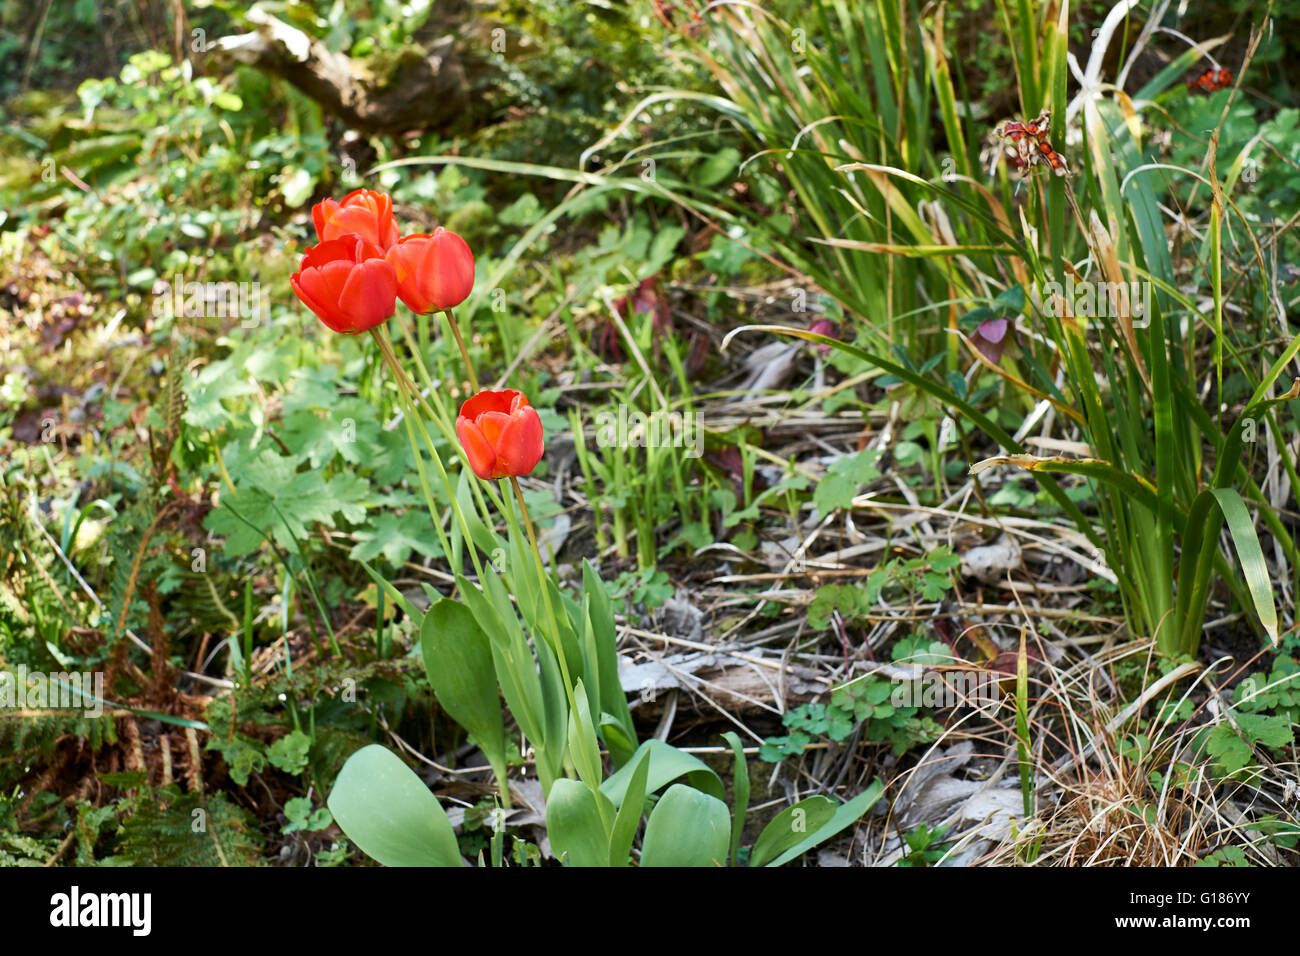 Red Tulips flowering in a garden flowerbed. Spring. UK. Stock Photo